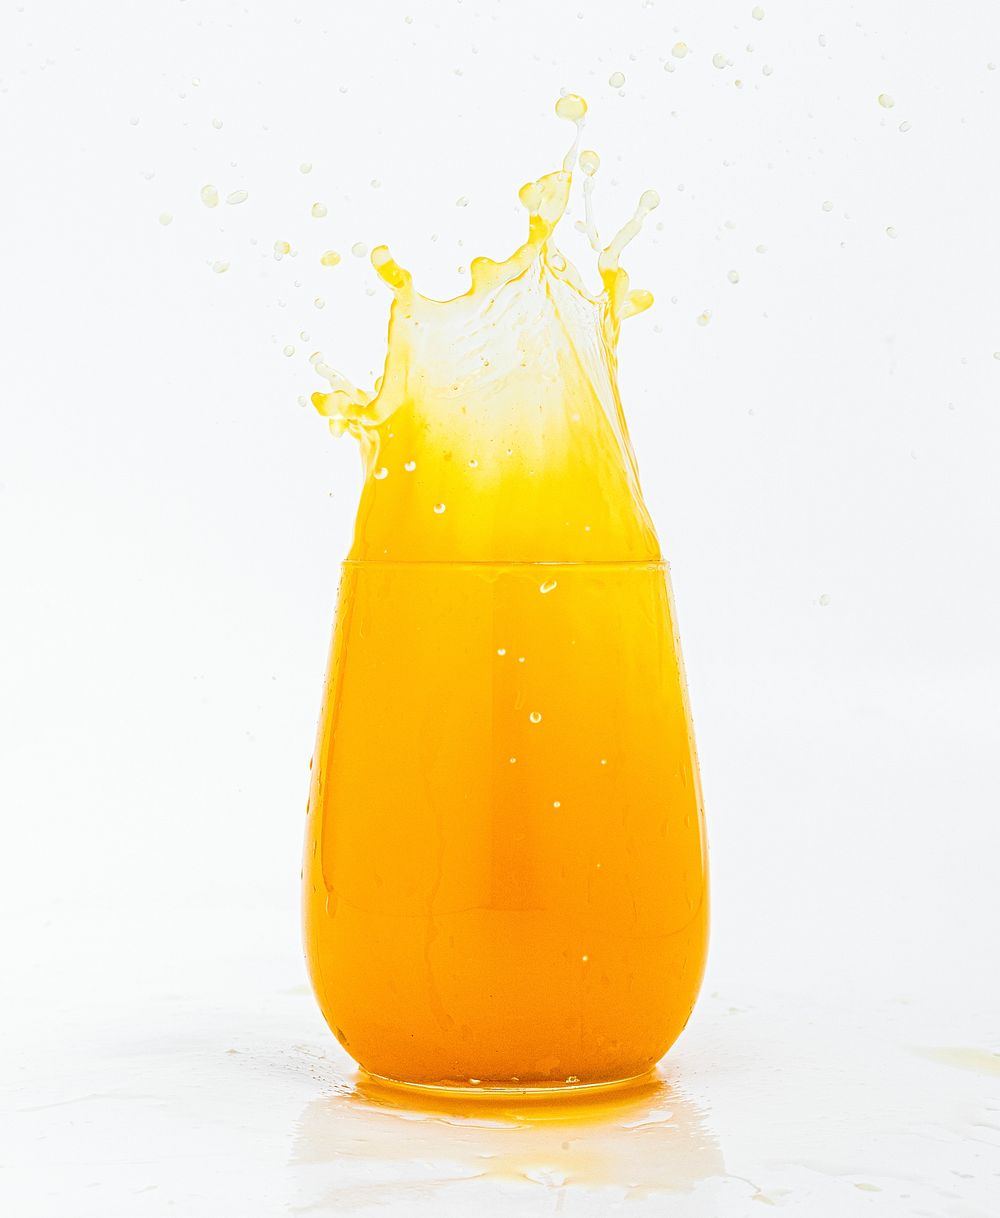 Spilling out of fresh orange juice